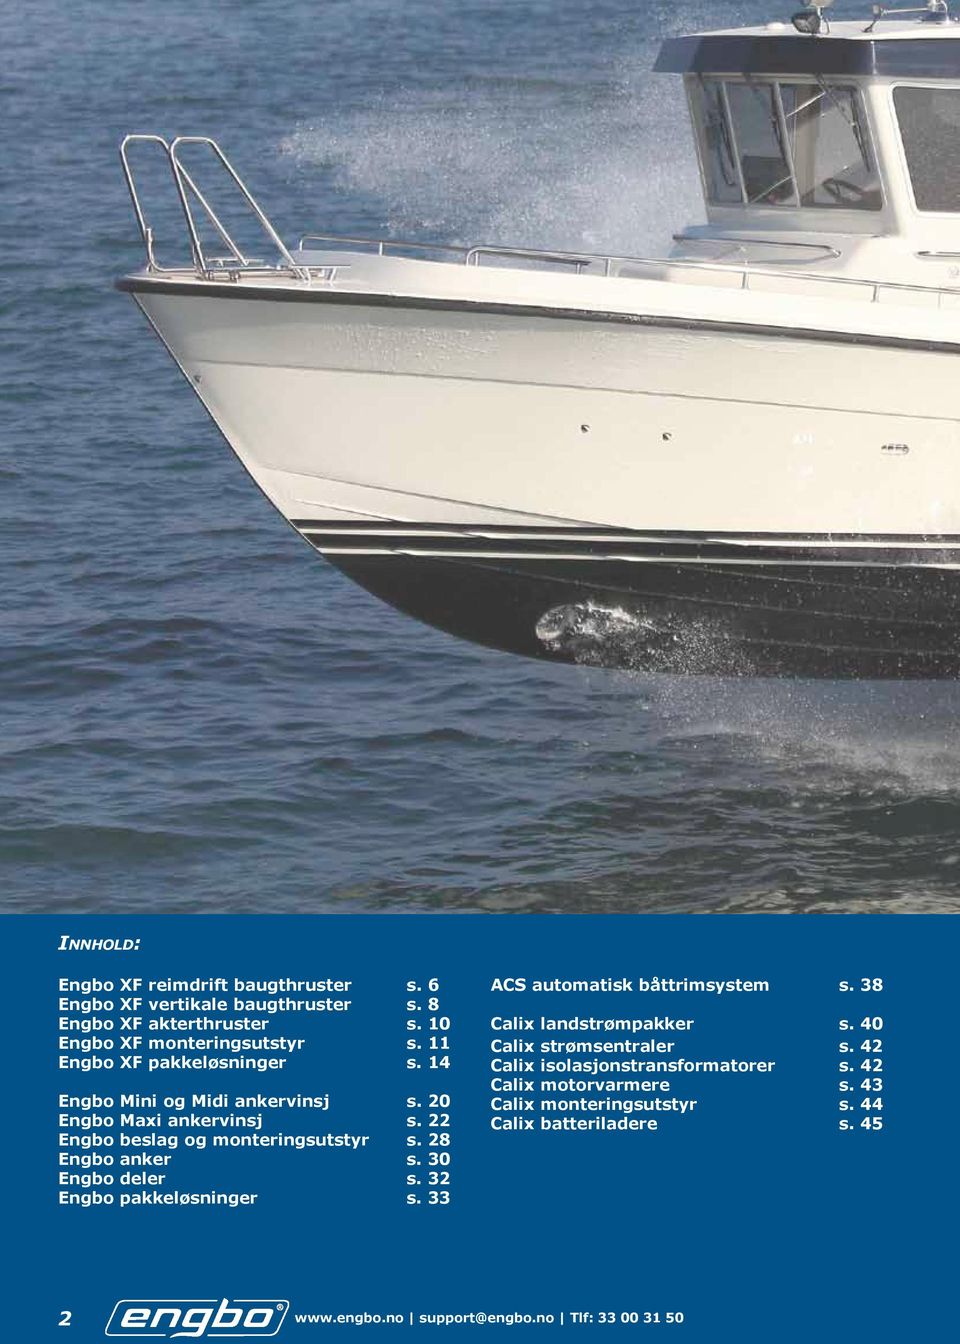 28 Engbo anker s. 30 Engbo deler s. 32 Engbo pakkeløsninger s. 33 ACS automatisk båttrimsystem s. 38 Calix landstrømpakker s.